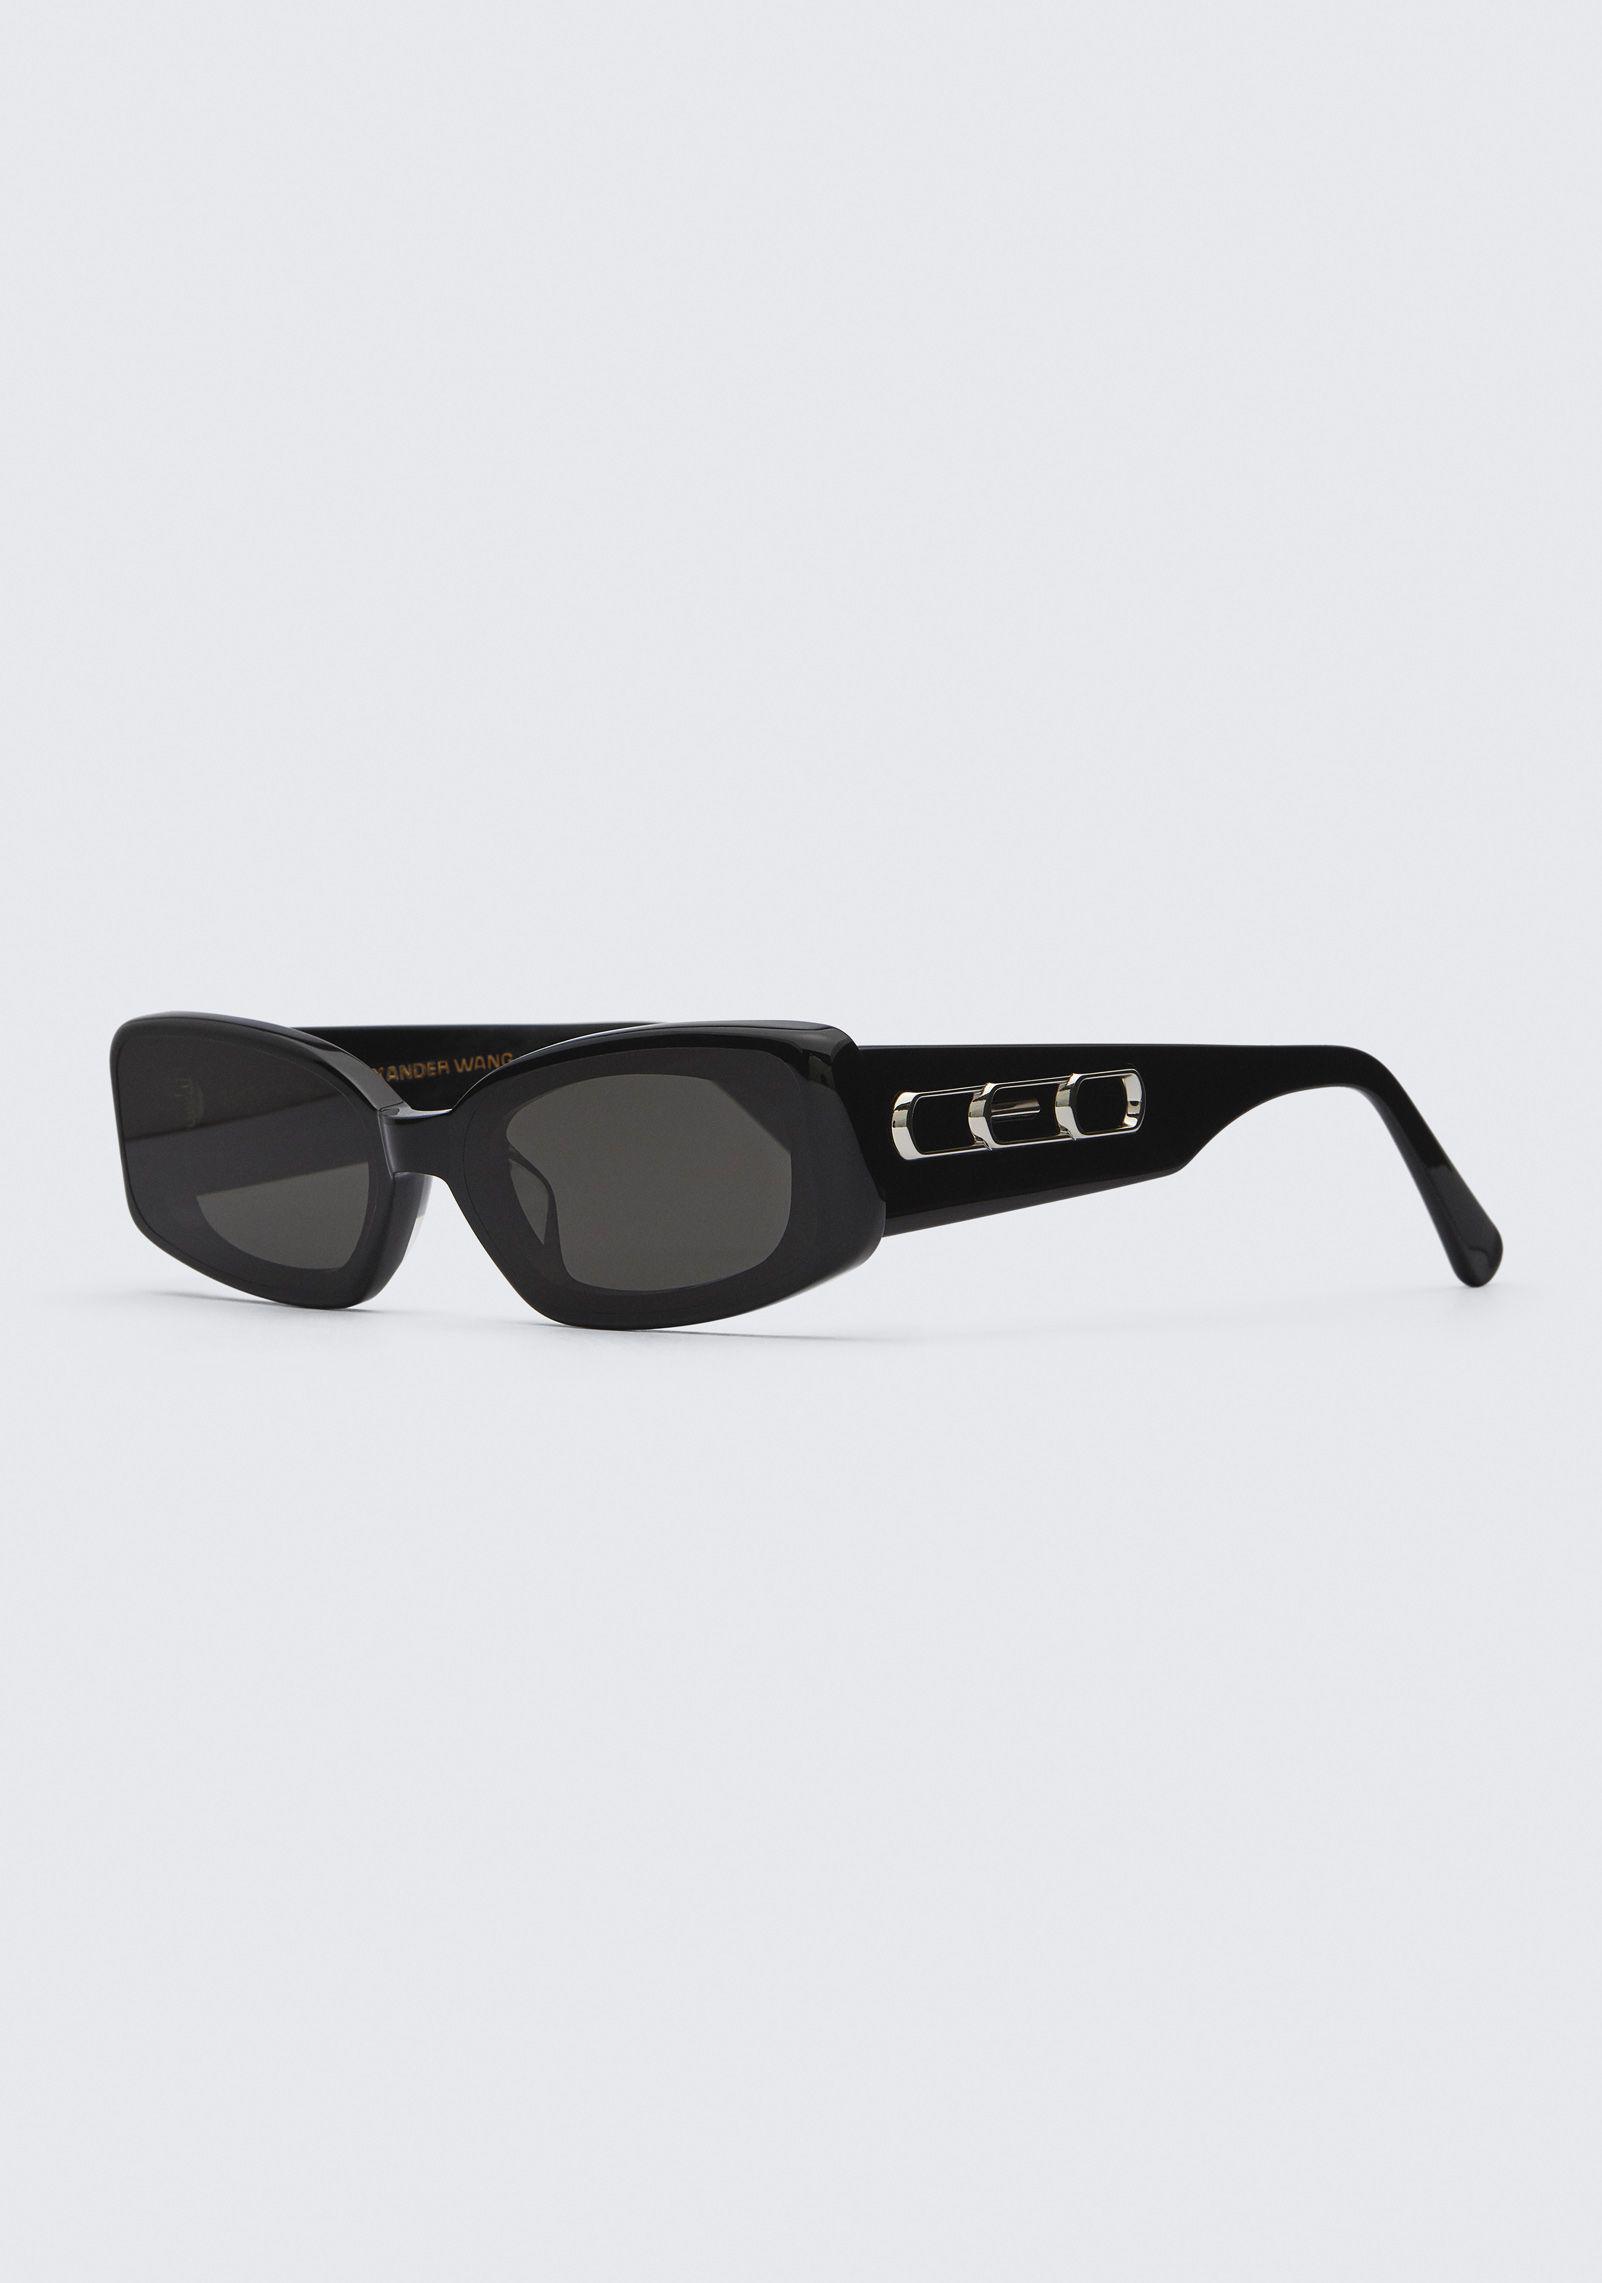 Alexander Wang Ceo Sunglasses in Black | Lyst